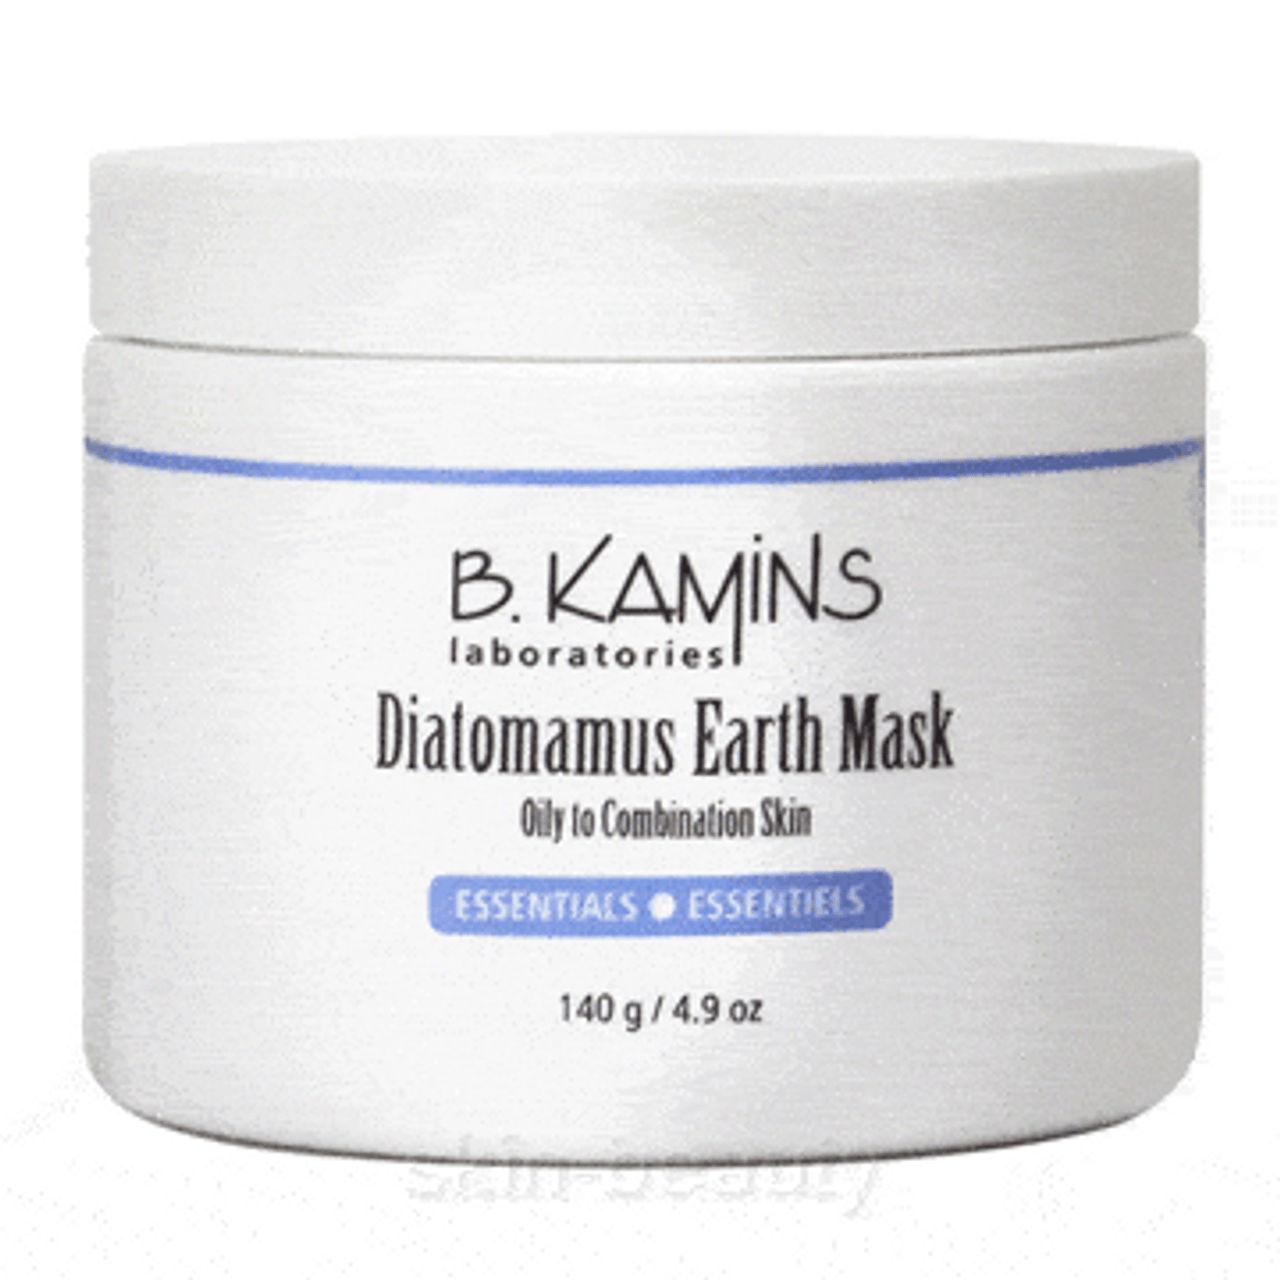 B. Kamins Diatomamus Earth Mask Oily to Combo skin - 4 oz